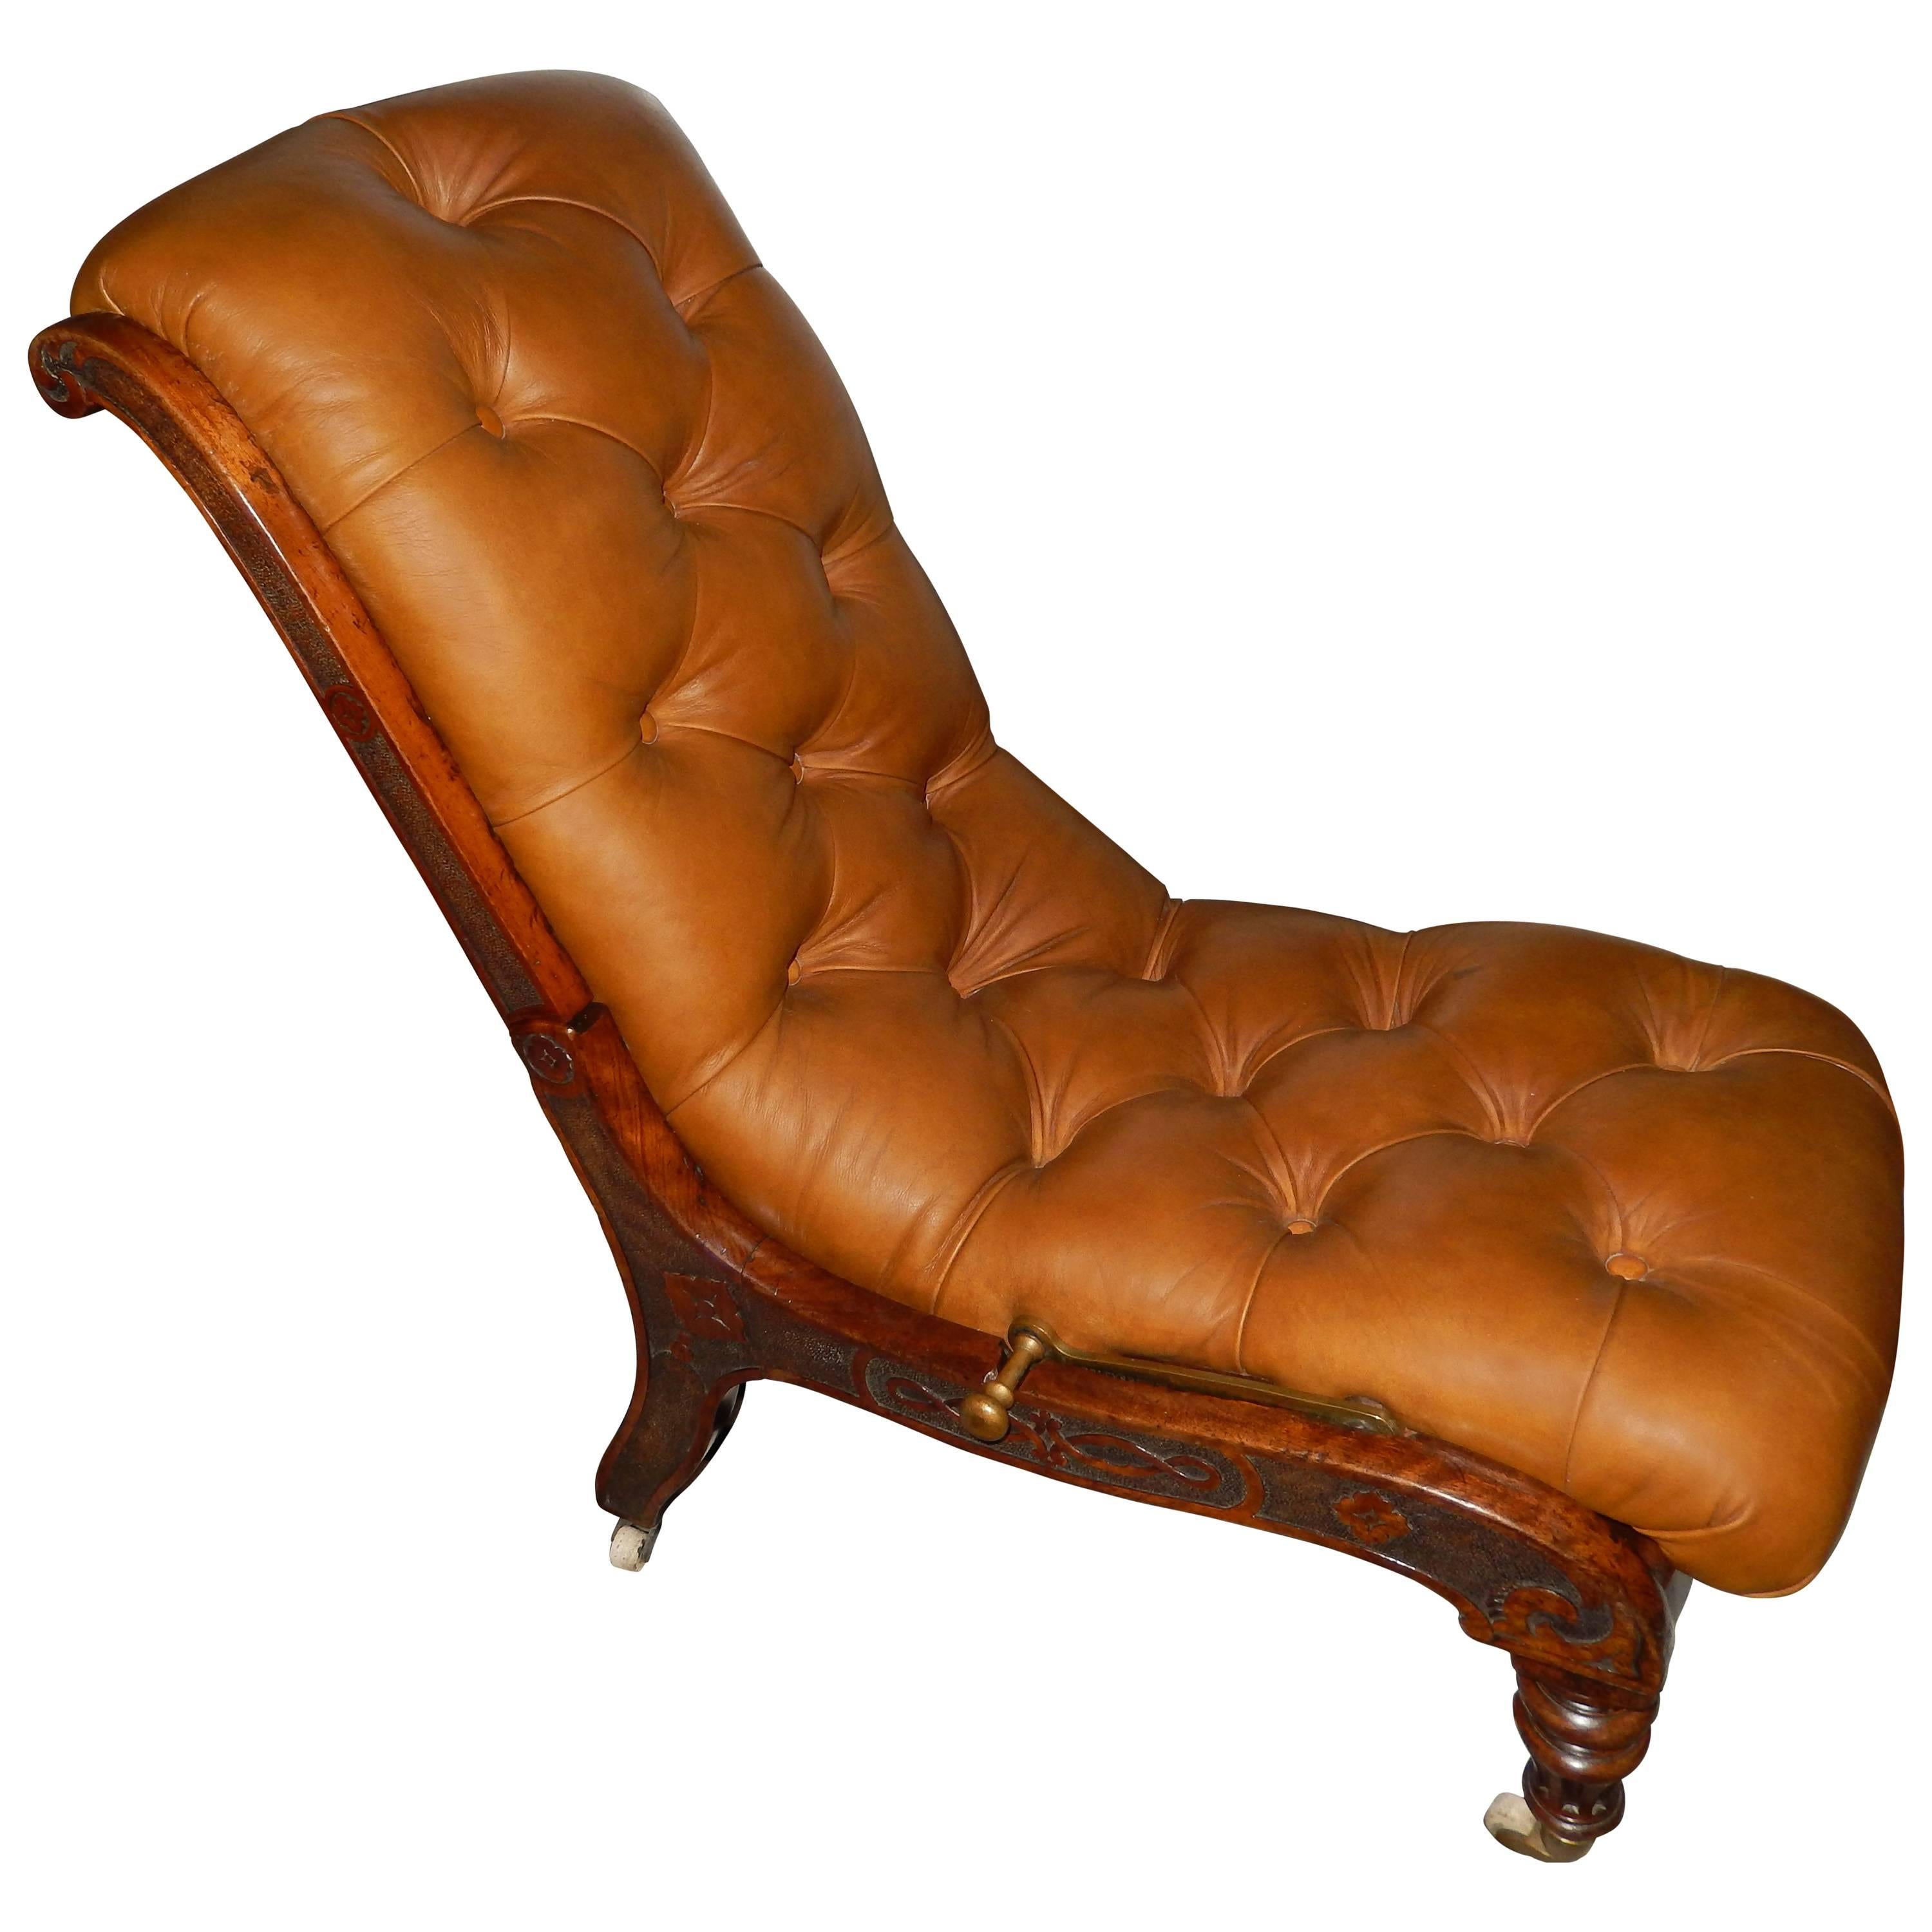 Rare 19th Century American Chaise Lounge